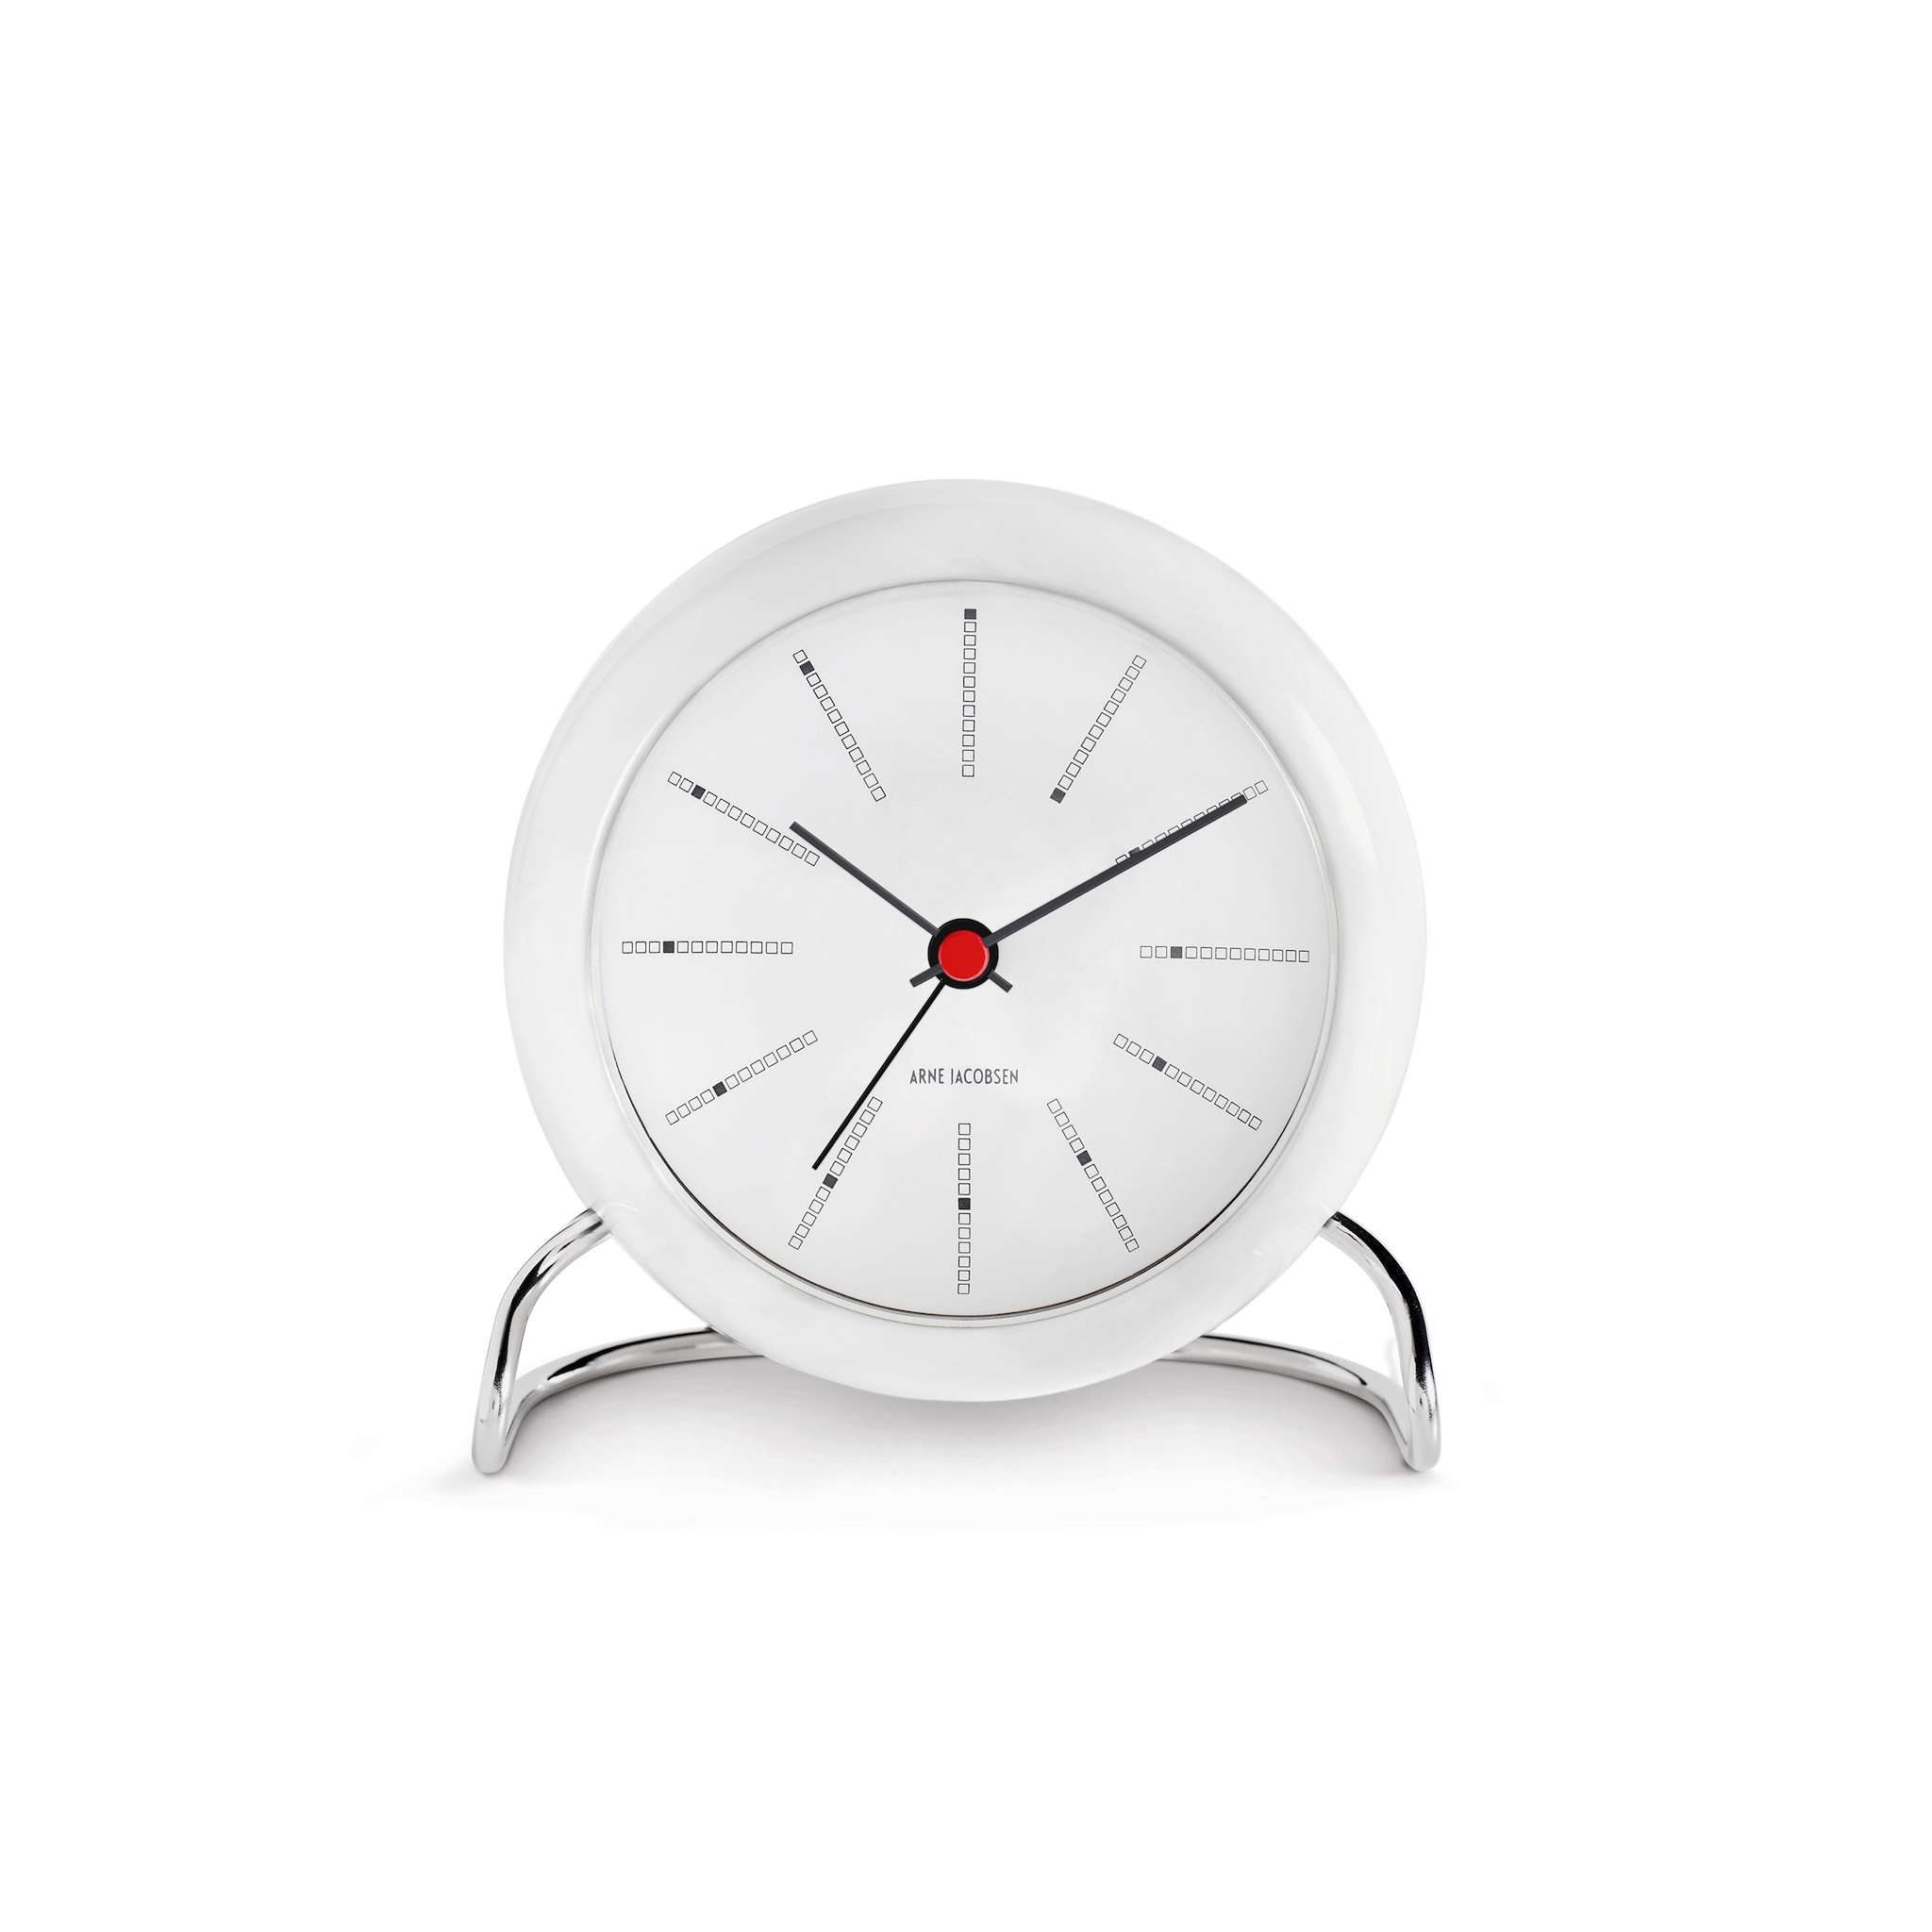 Arne Jacobsen Bankers Alarm Clock, White